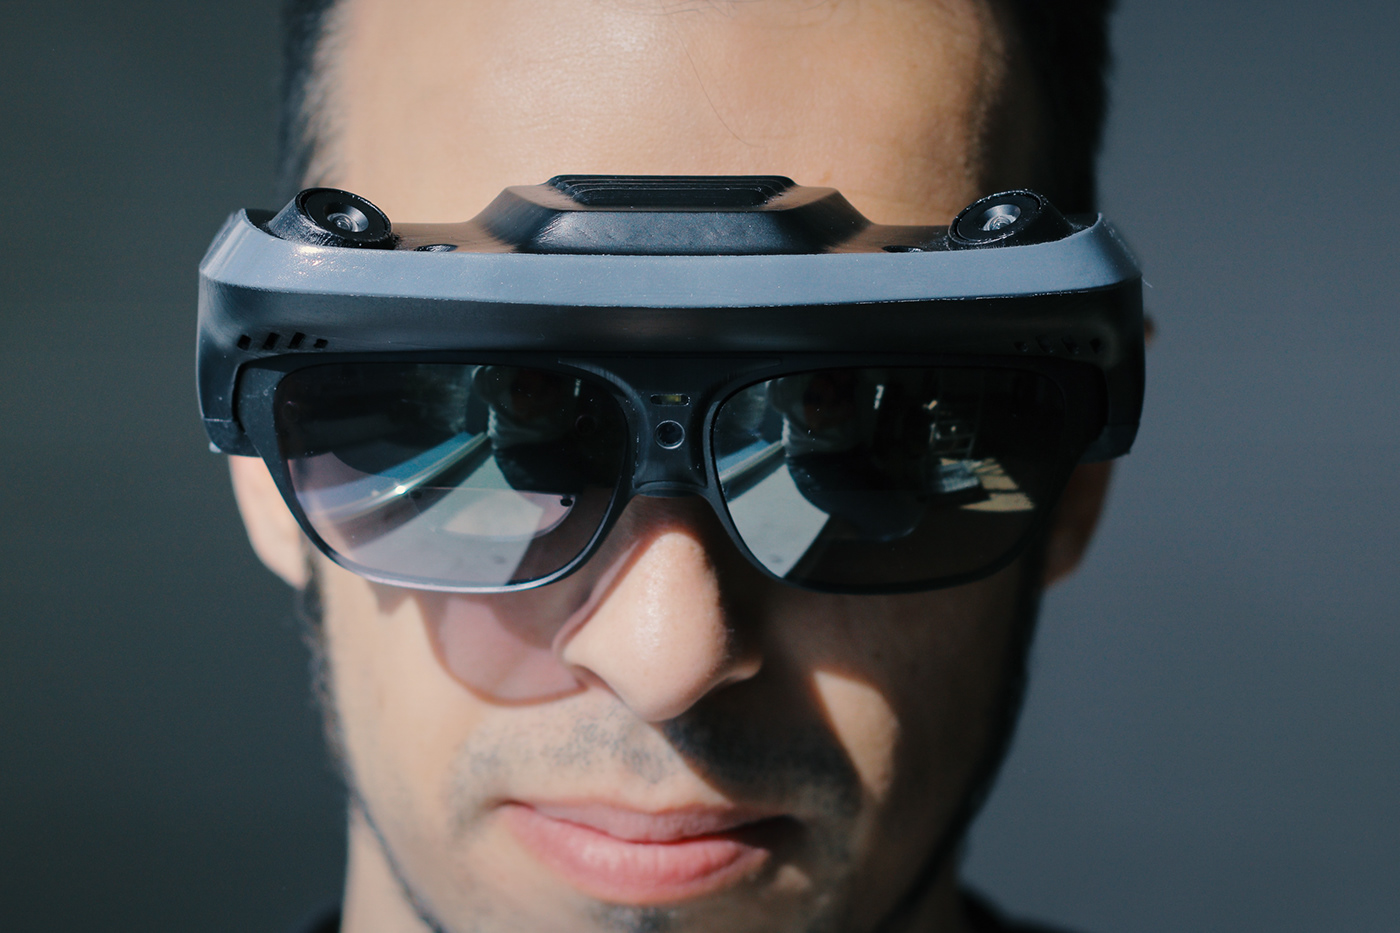 Aircraft glass AR virtual augmented design product Smart smartglass Gadget